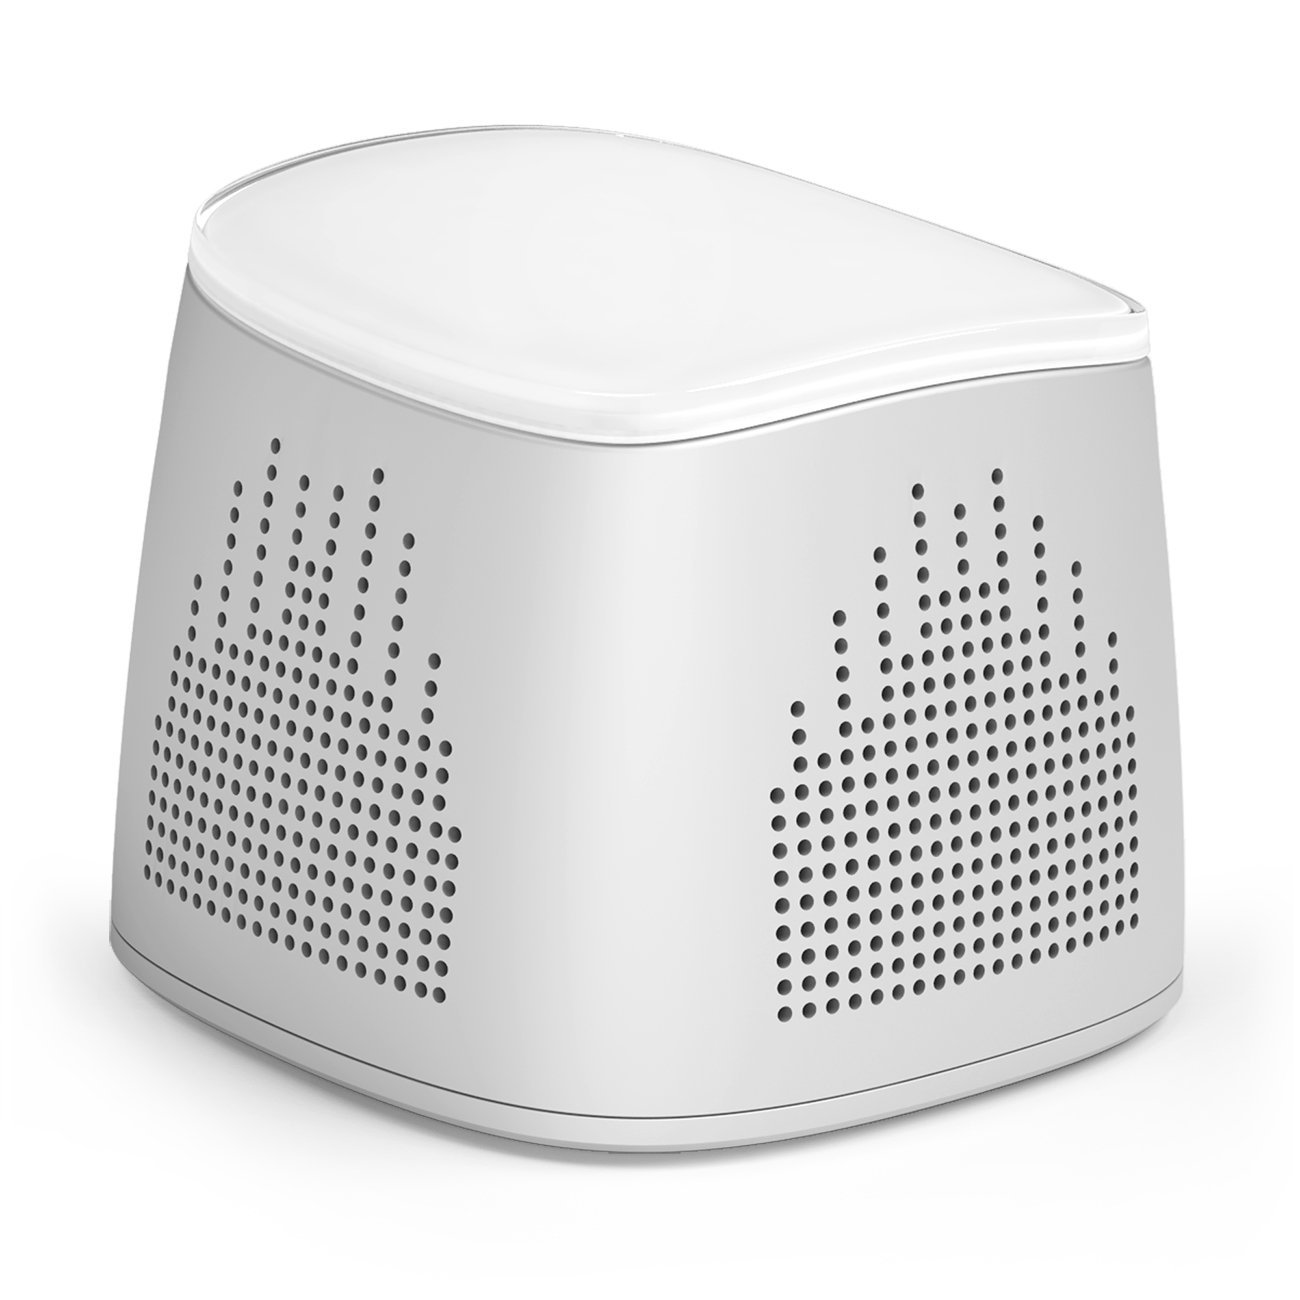 Bild zu [Prime] Mini Portable Bluetooth Lautsprecher Inateck Ultra für 12,99€ inkl. Versand